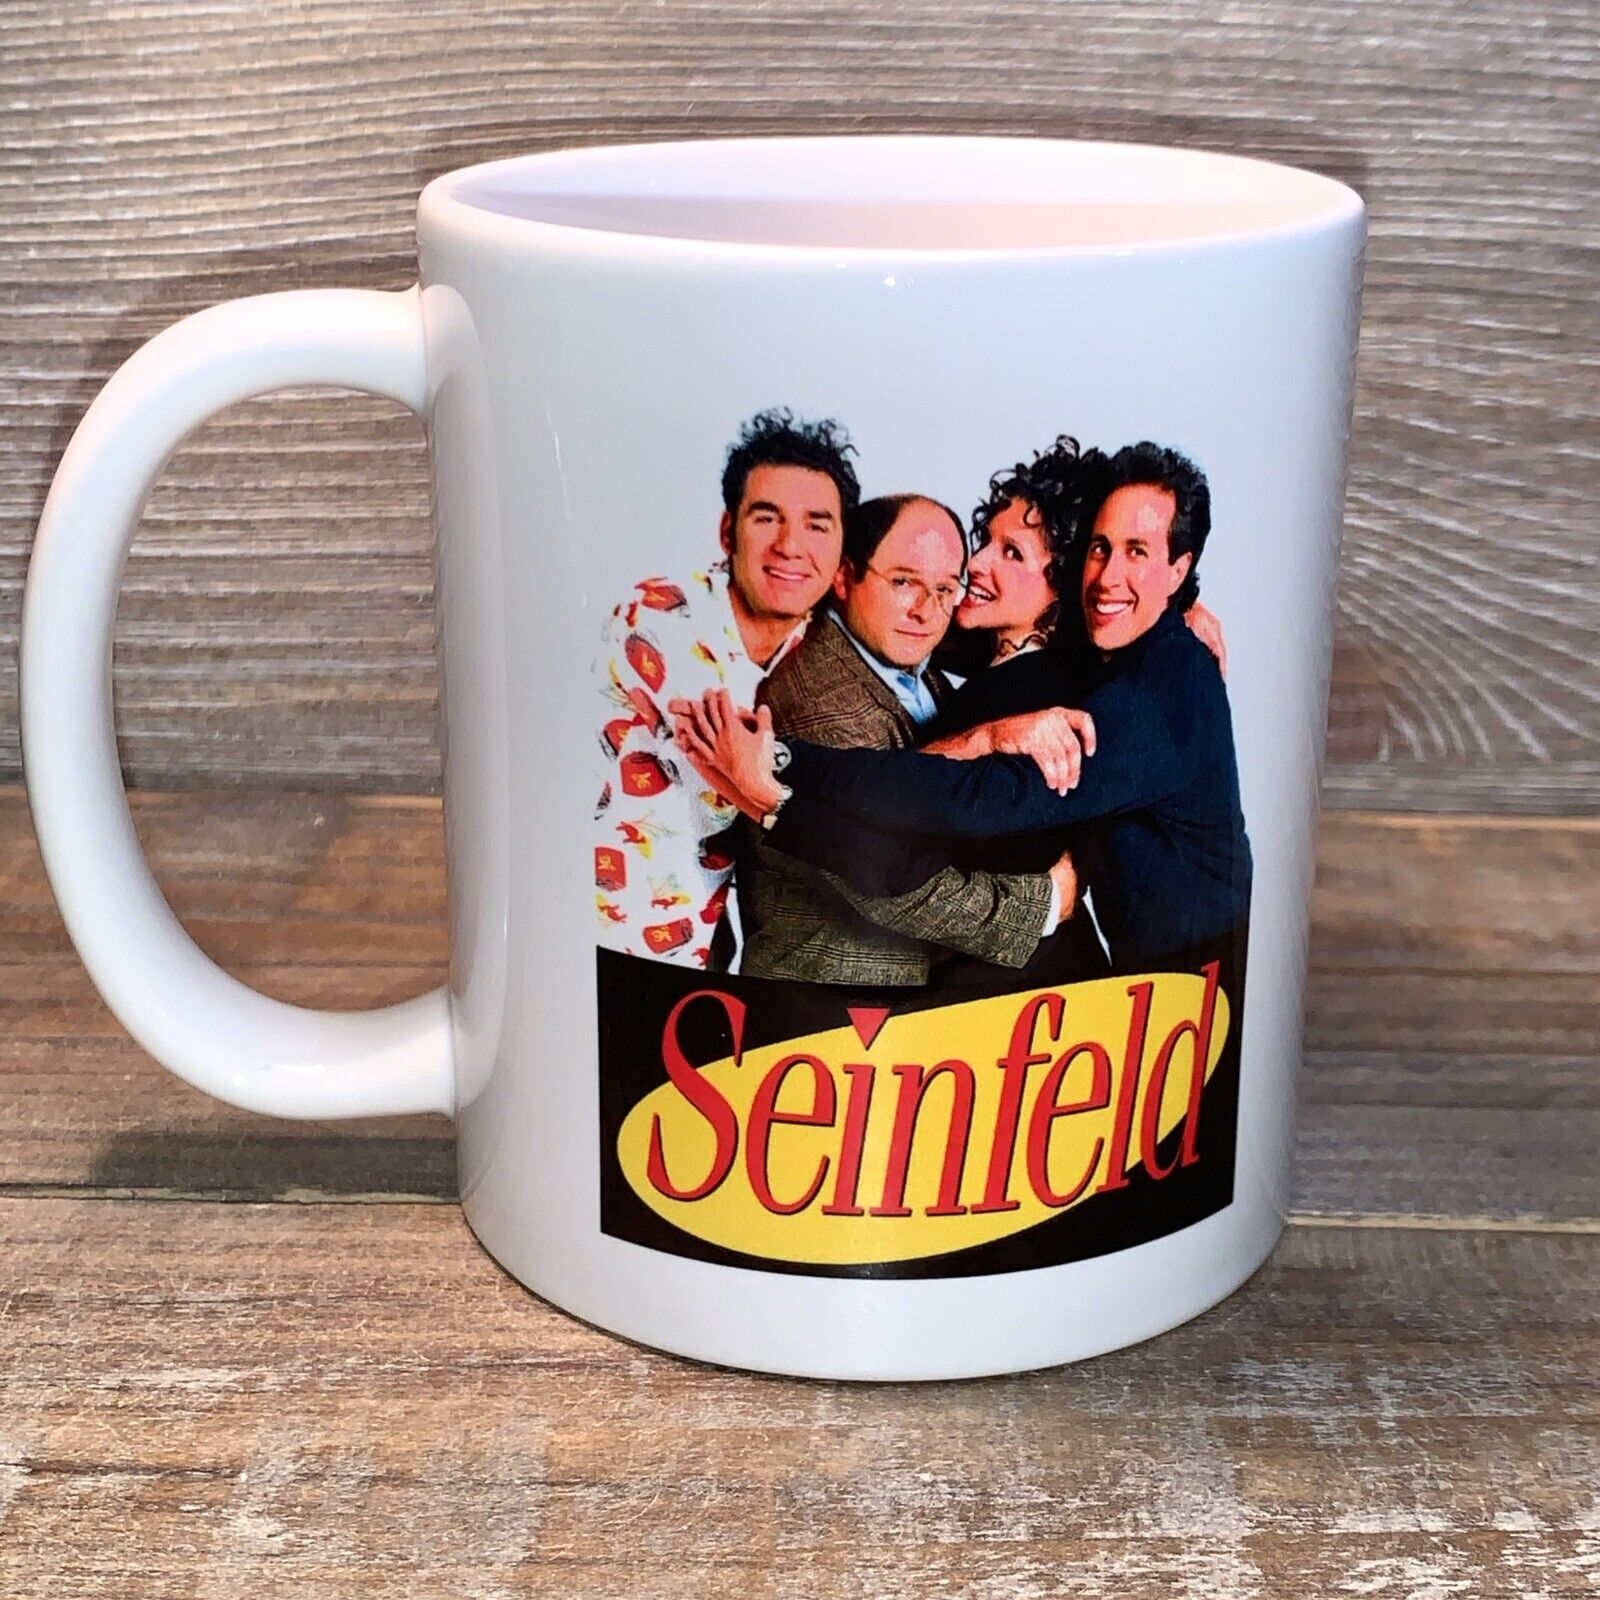 Seinfeld Orca Coatings Ceramic Glass Coffee Mug Cup Made In China (Used) (White)